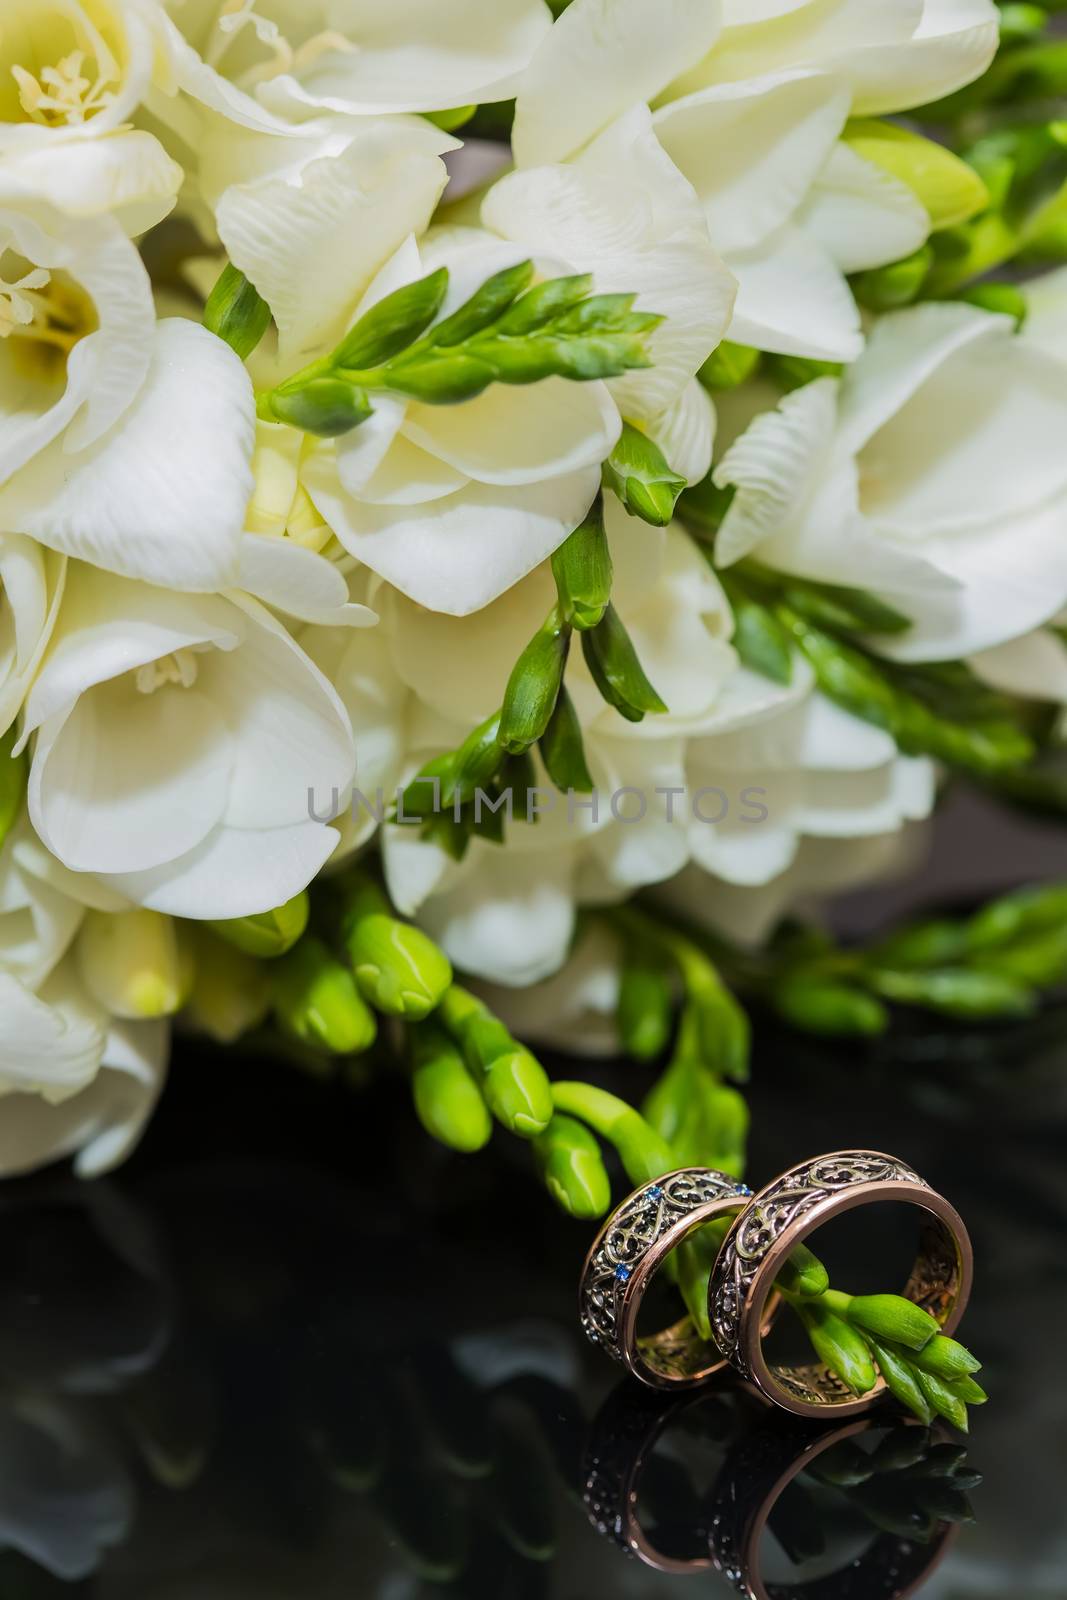 The wedding bouquet. Close up. Wedding background